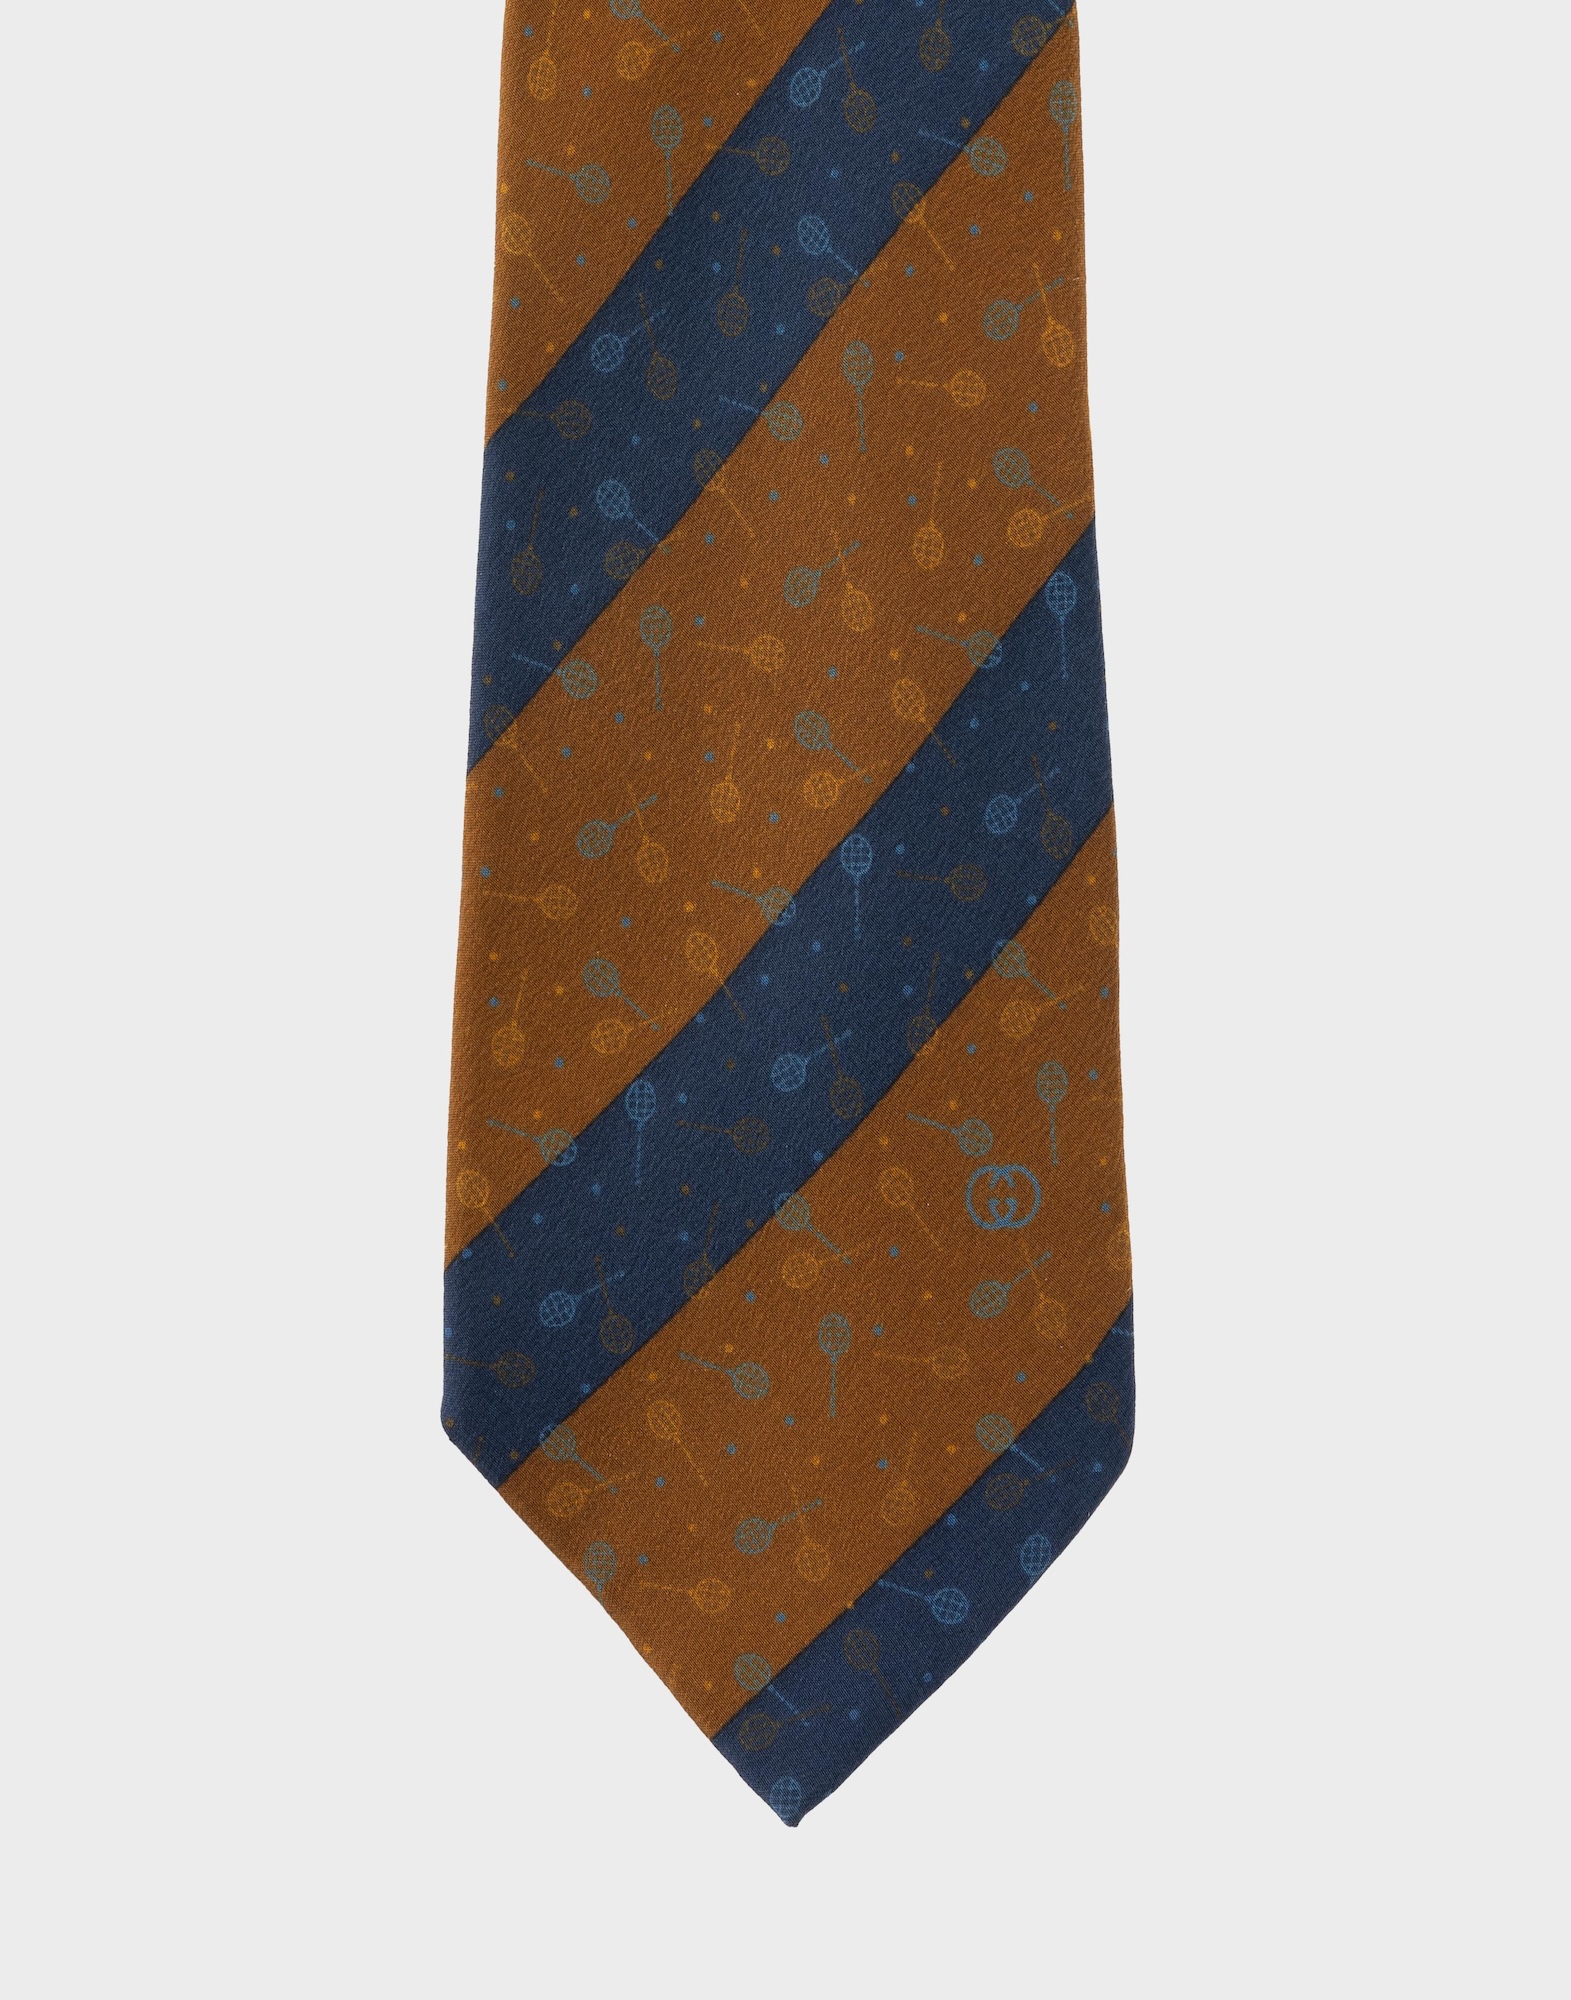 men's silk tie with brown and blue diagonal stripe pattern, tennis rackets